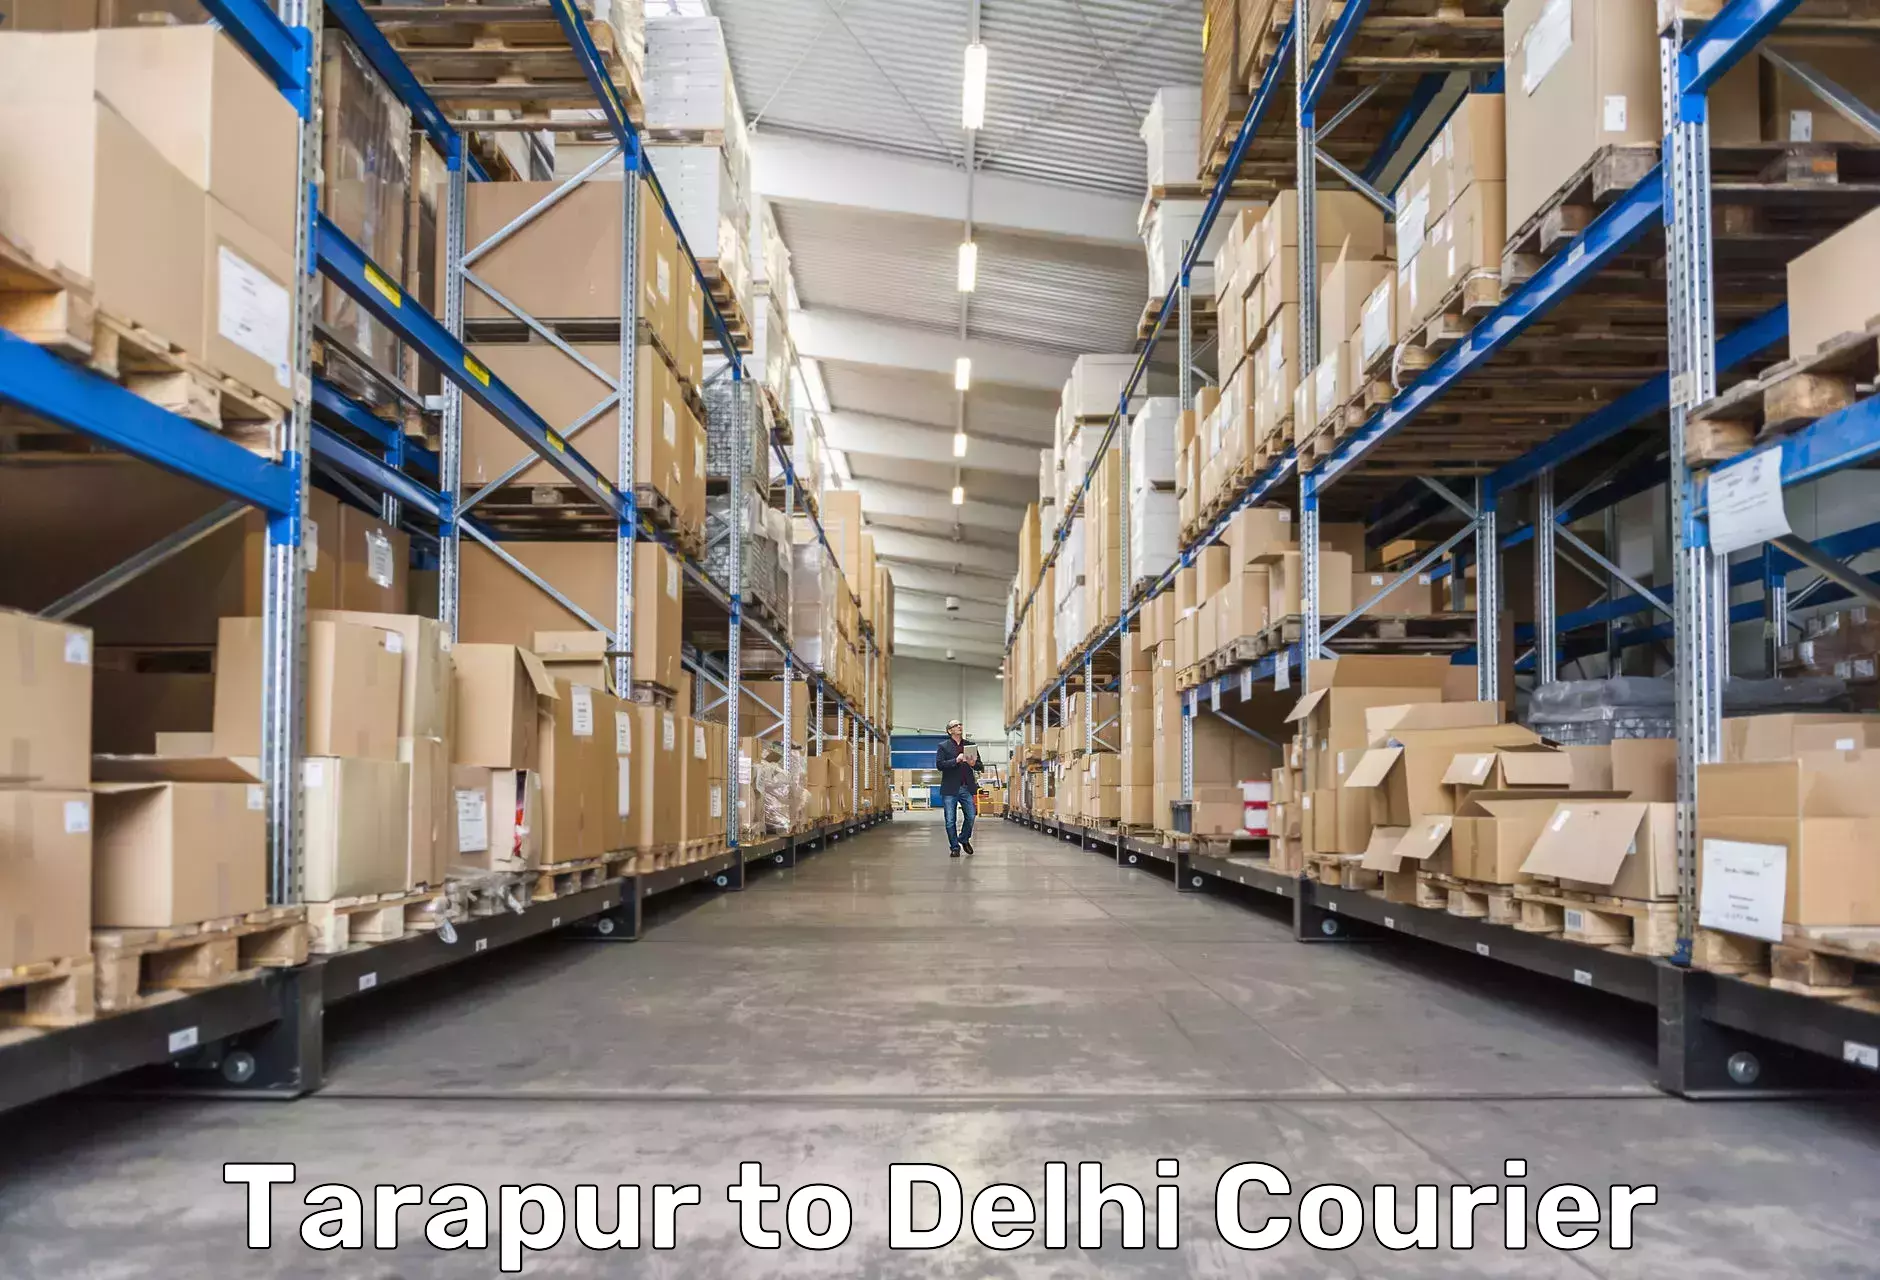 Express delivery network Tarapur to Delhi